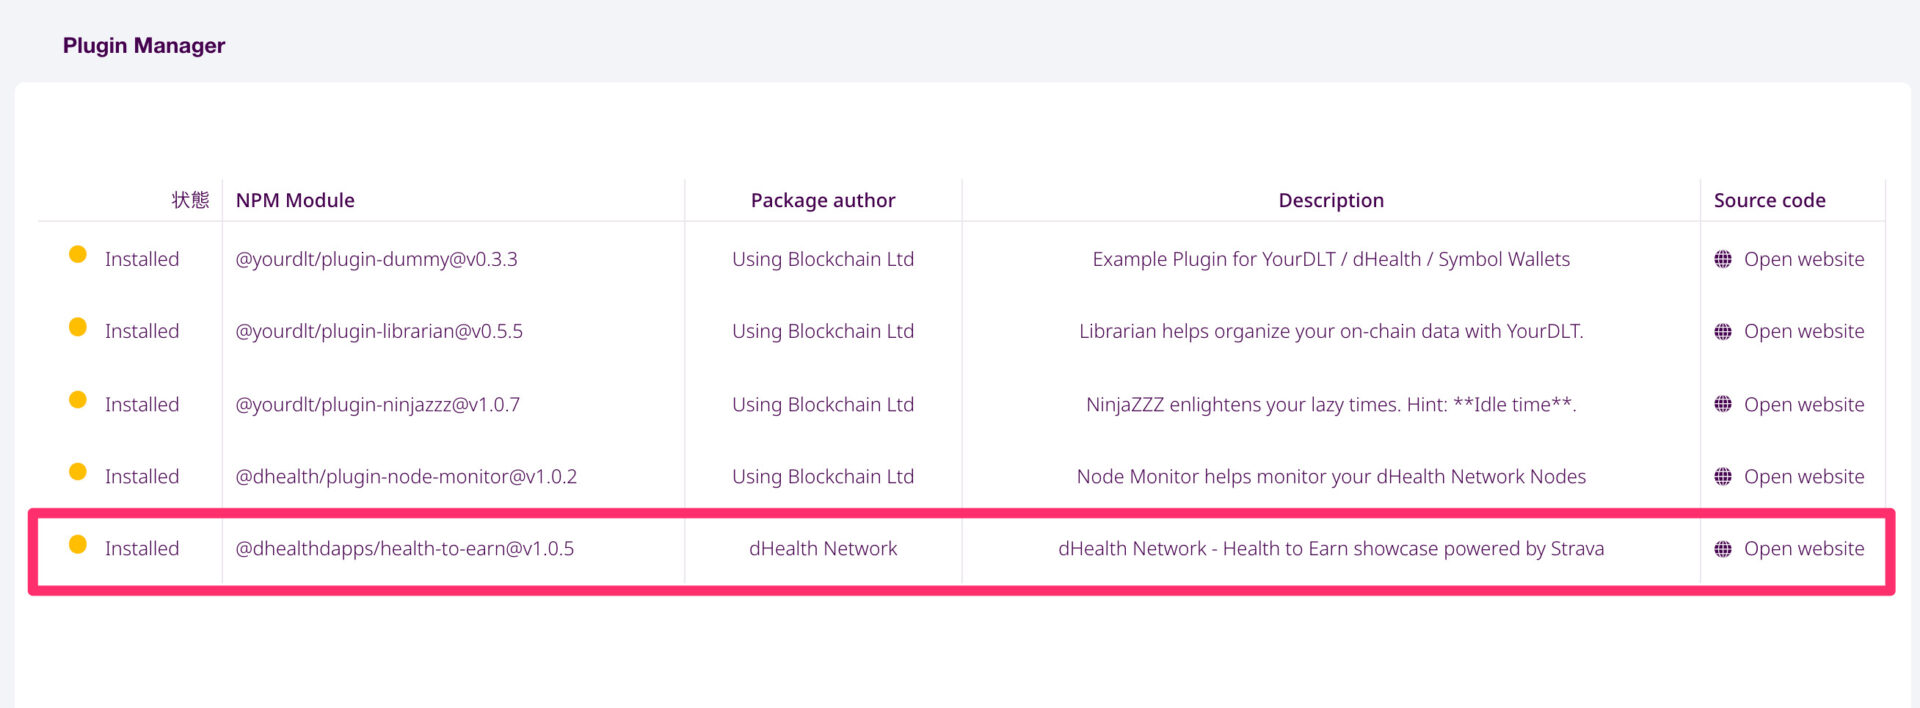 dHealth Network　strava　DHP　Health to earn